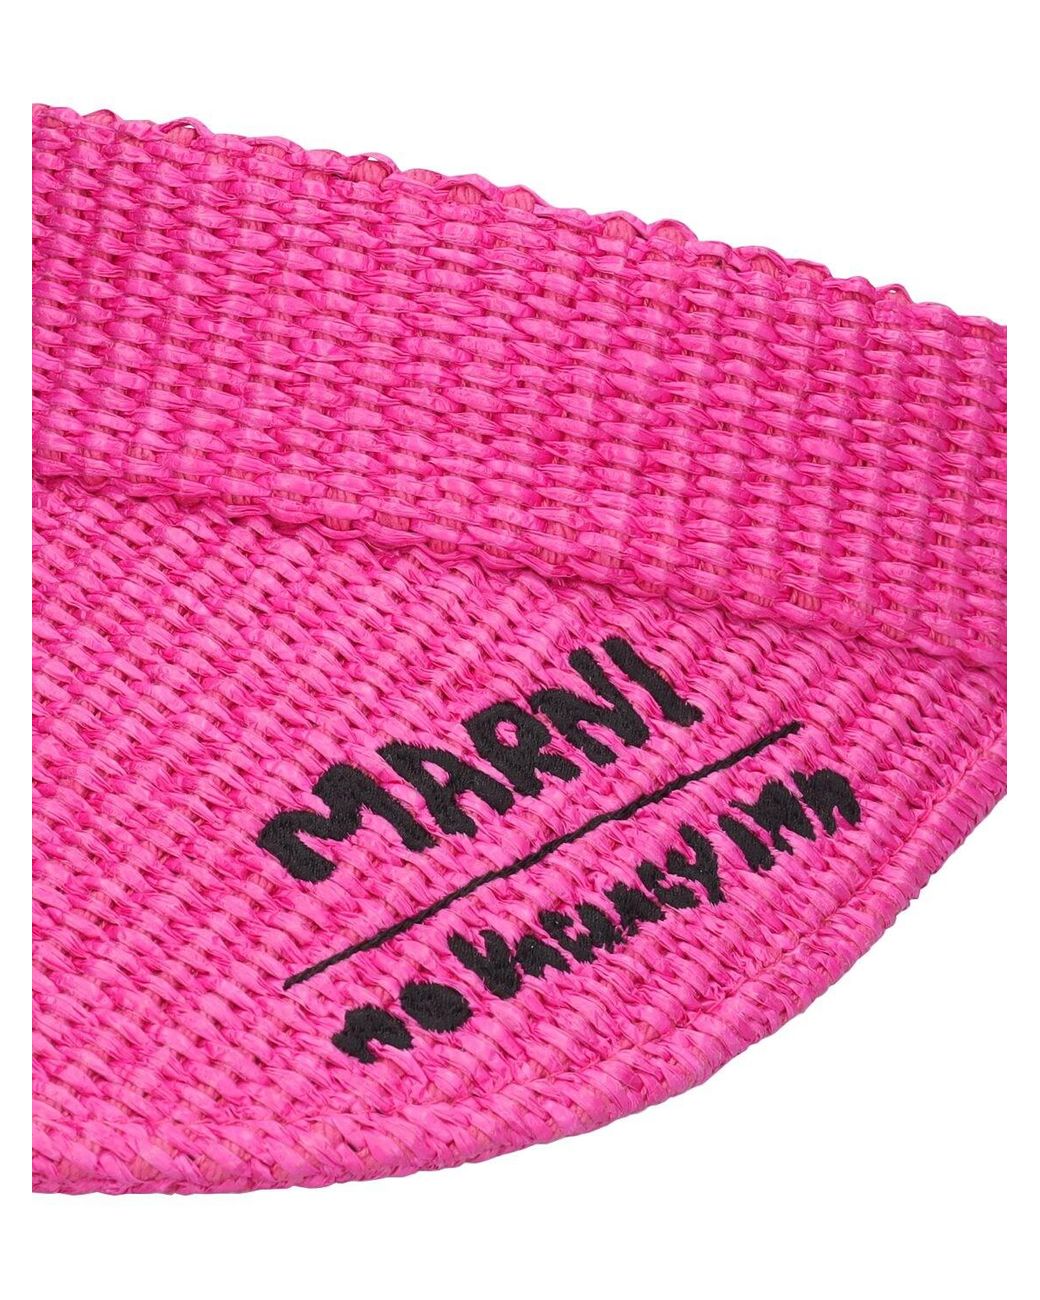 Marni Canvas Visor Hat in Pink | Lyst Australia